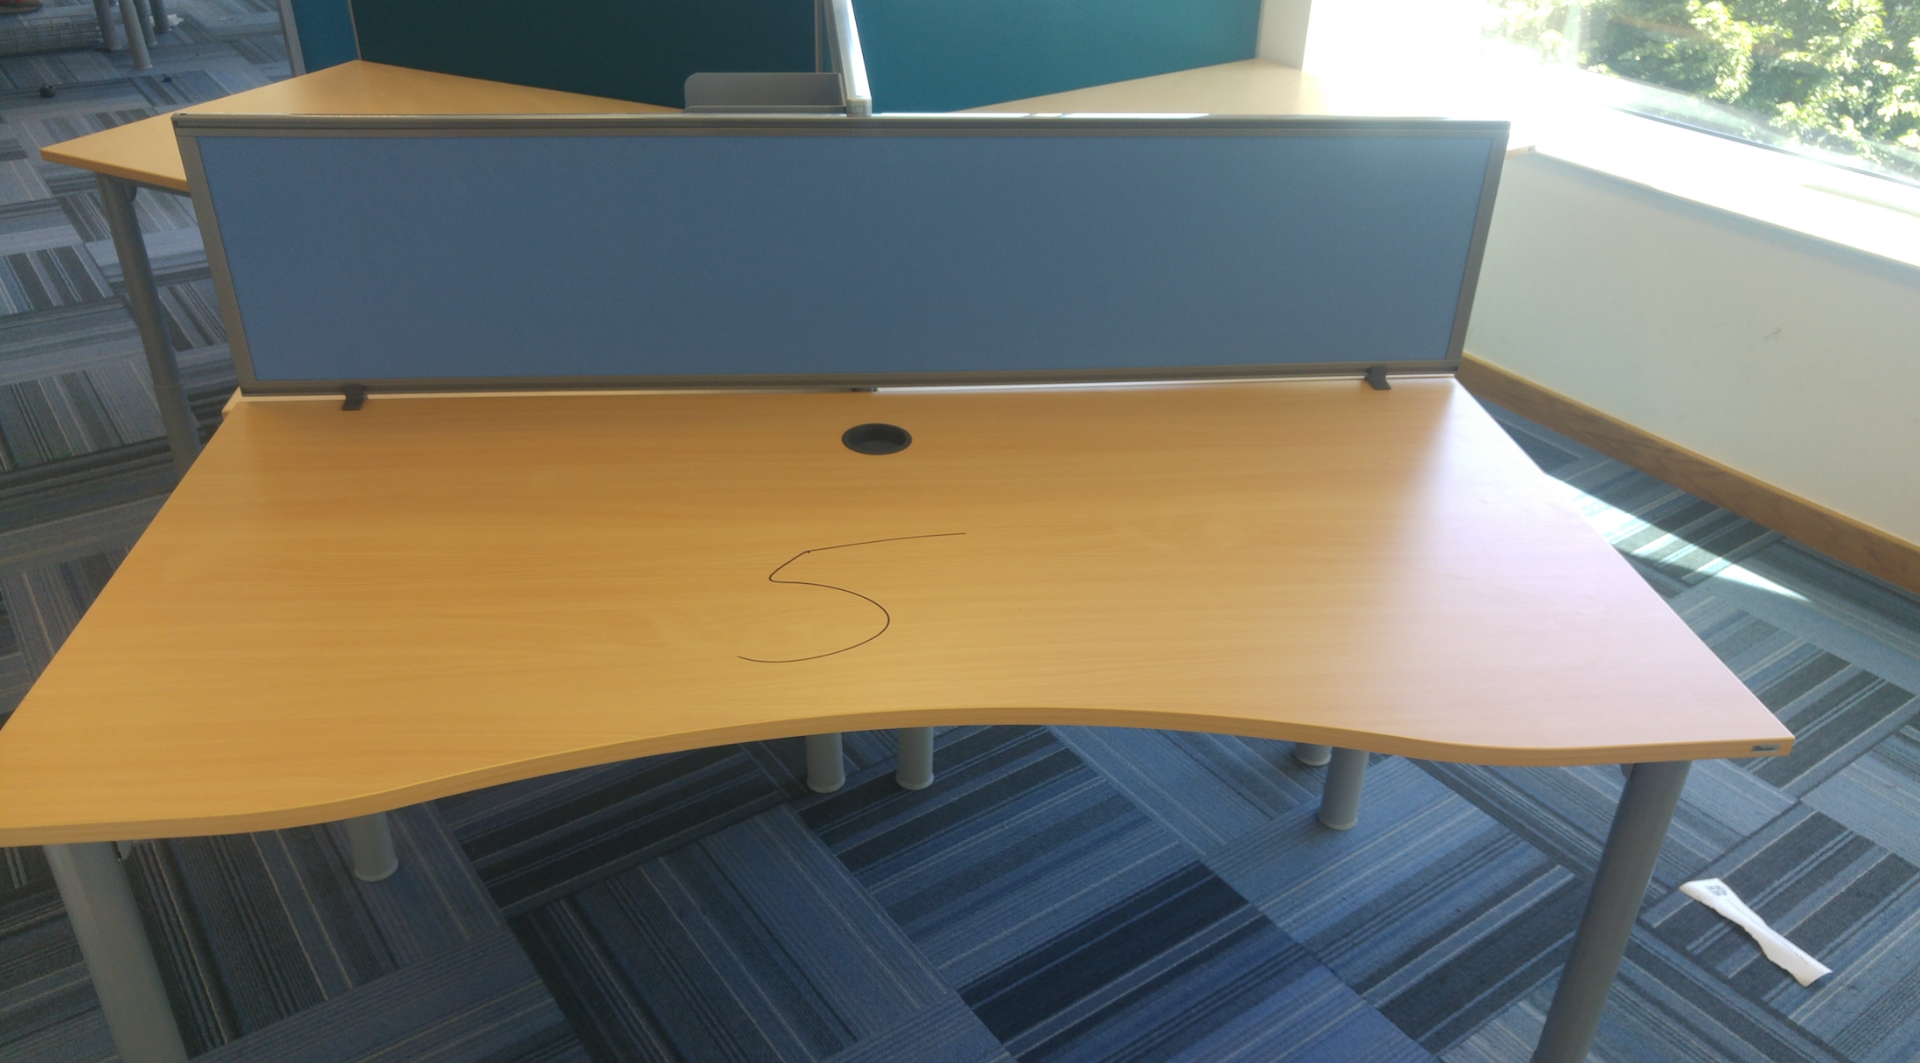 1 x Office Desk with Adjustable Metal Legs